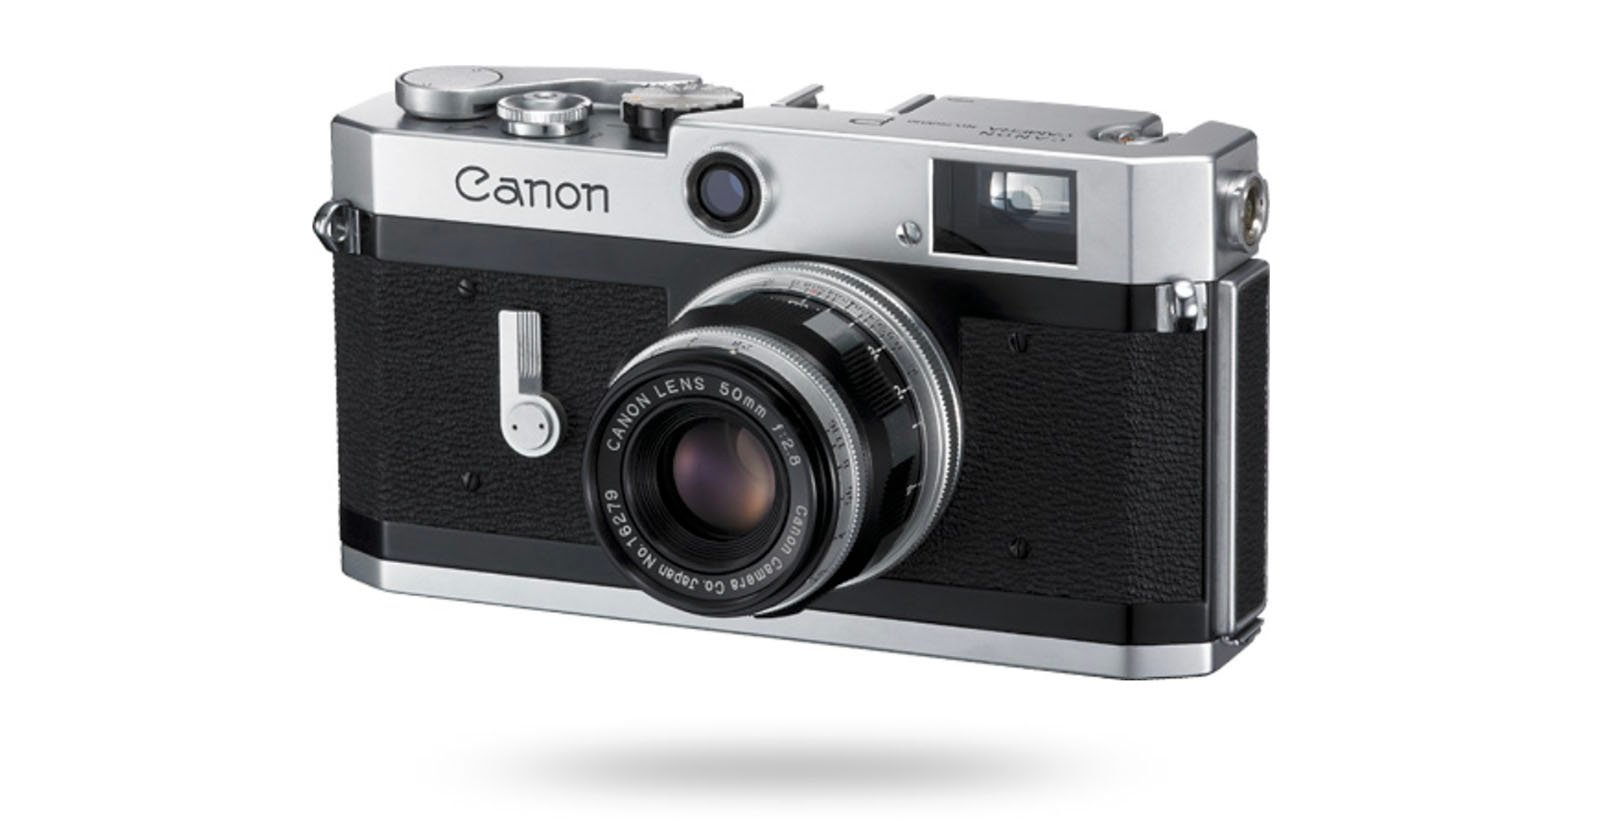  canon considering making retro-inspired digital camera report 